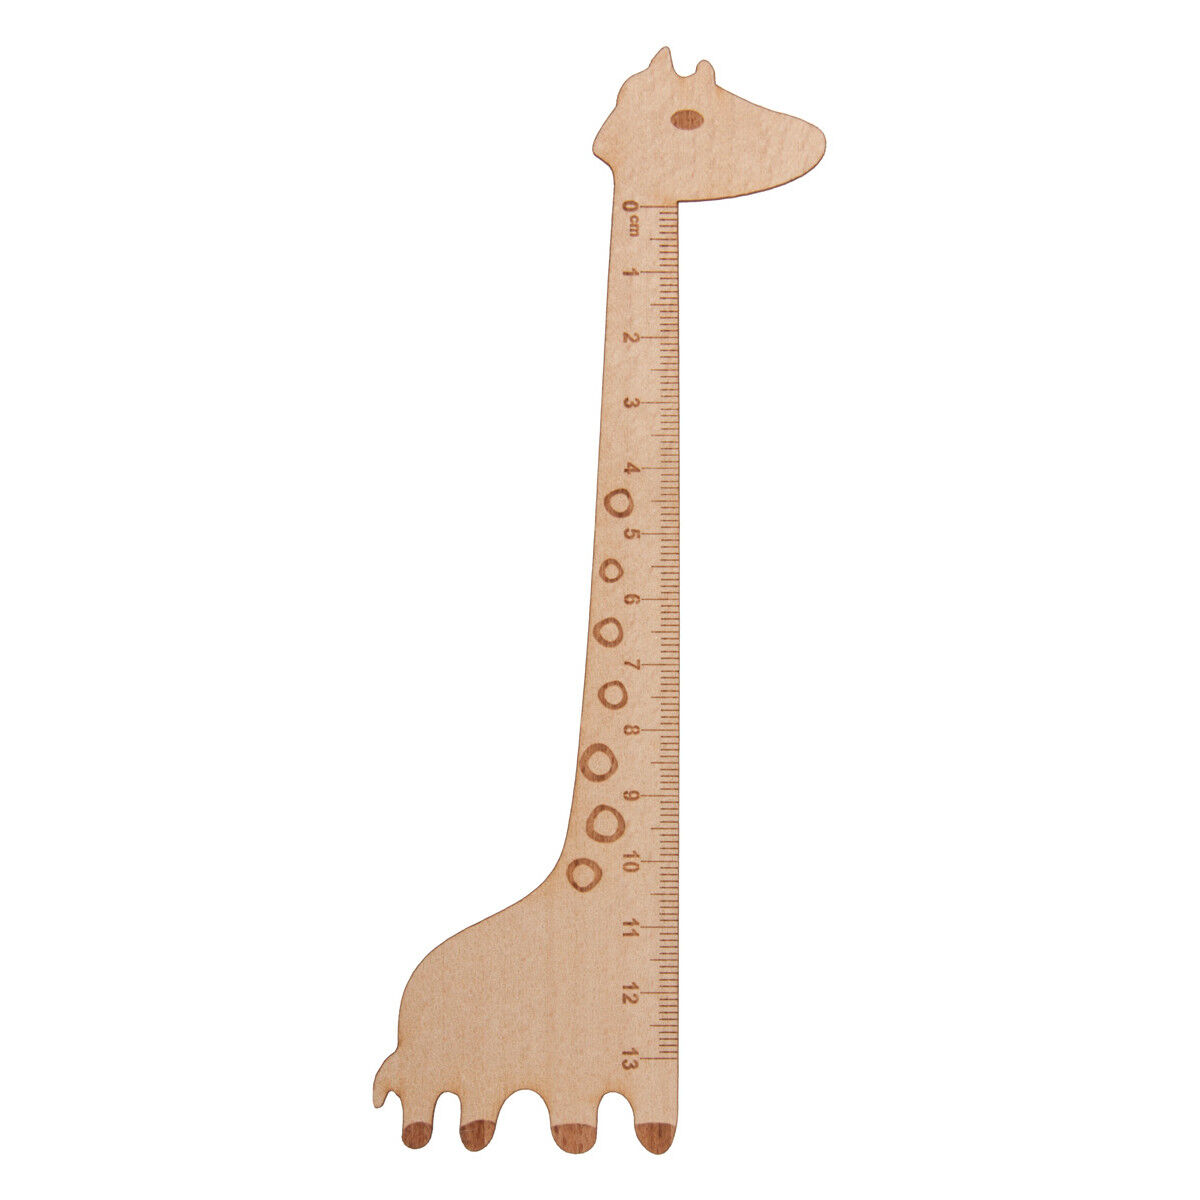 Fun-shaped wooden ruler for kids (giraffe)